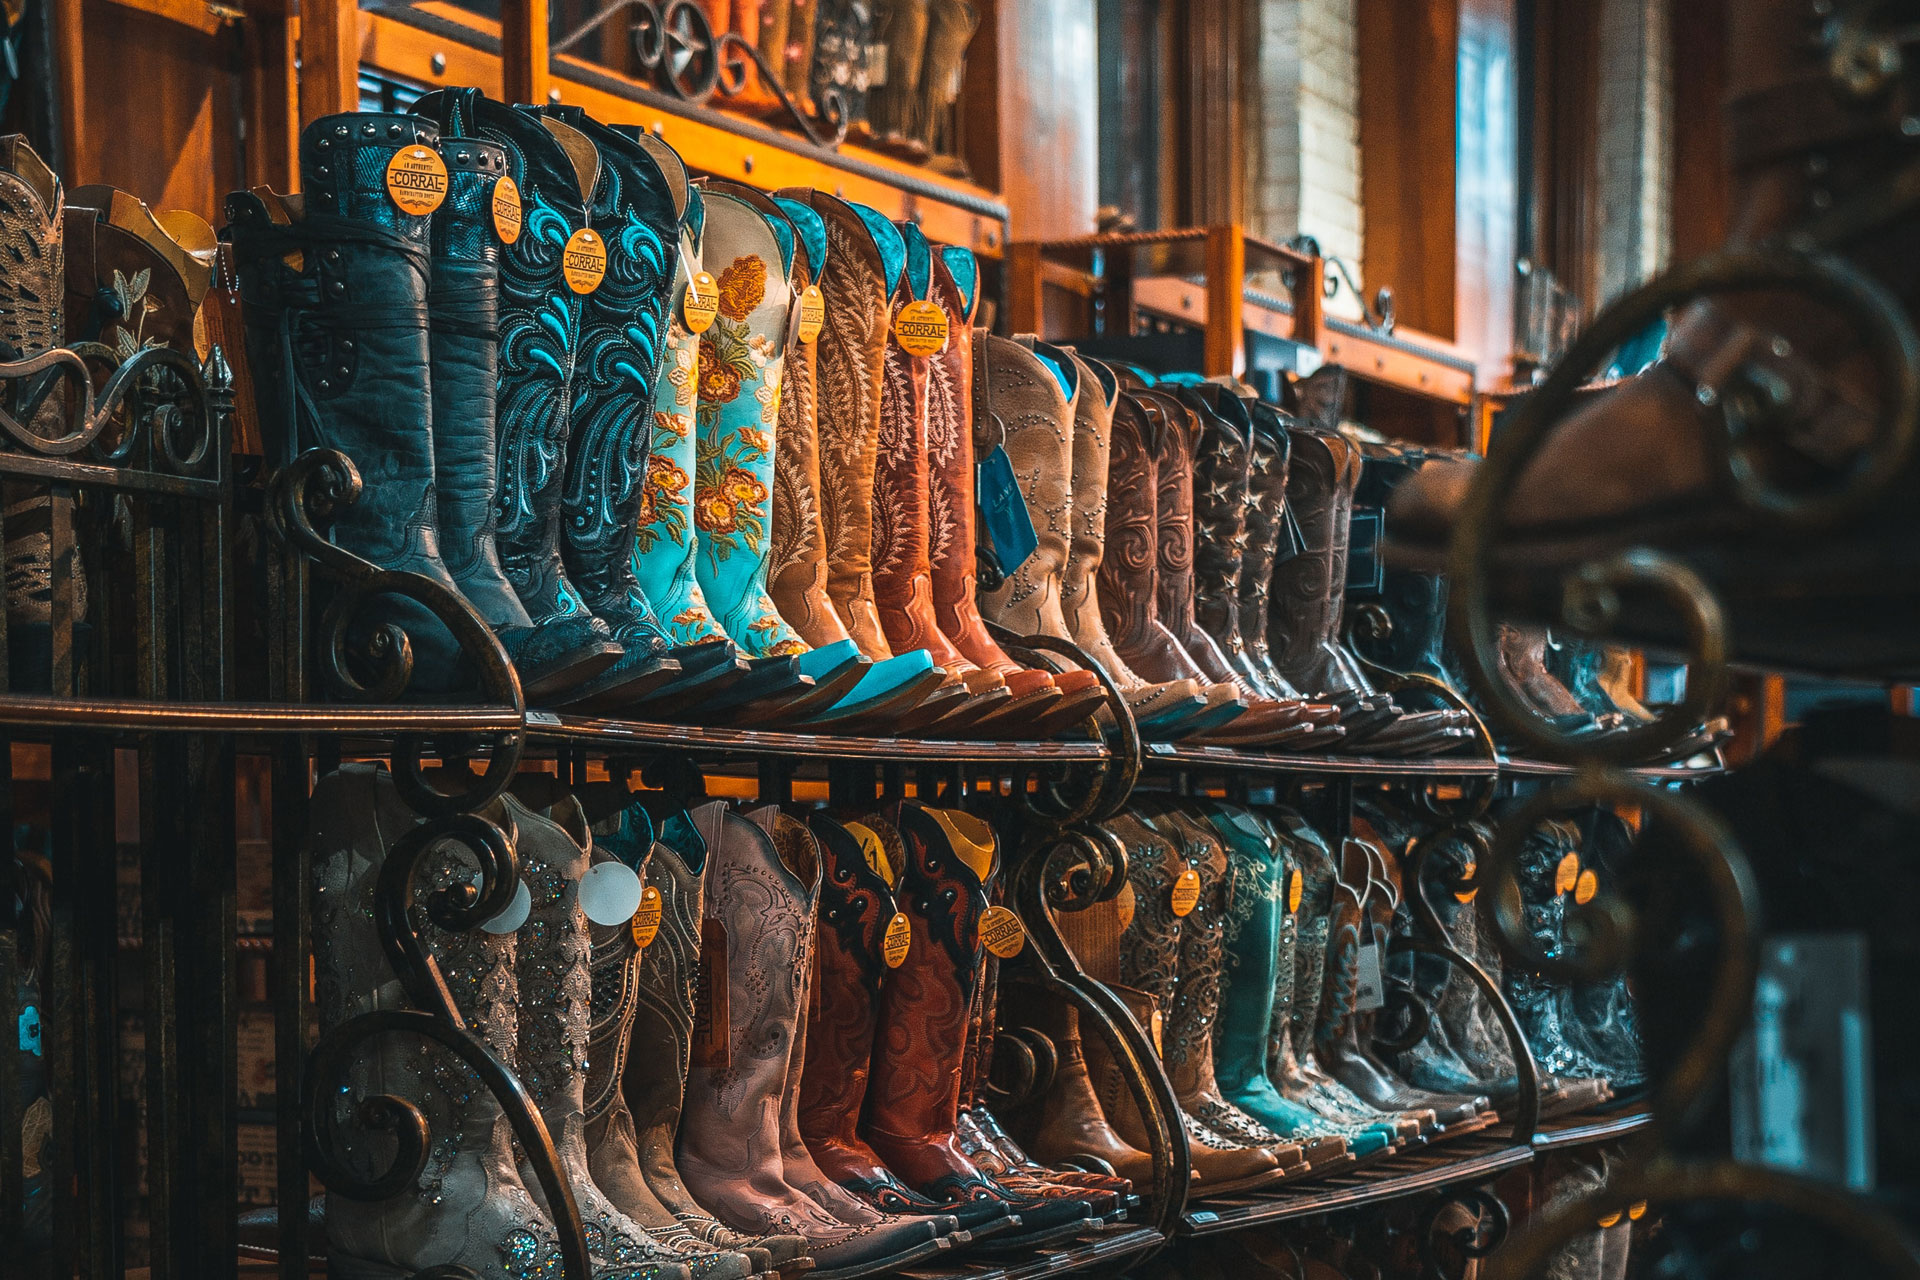 cowboy boots on shelves